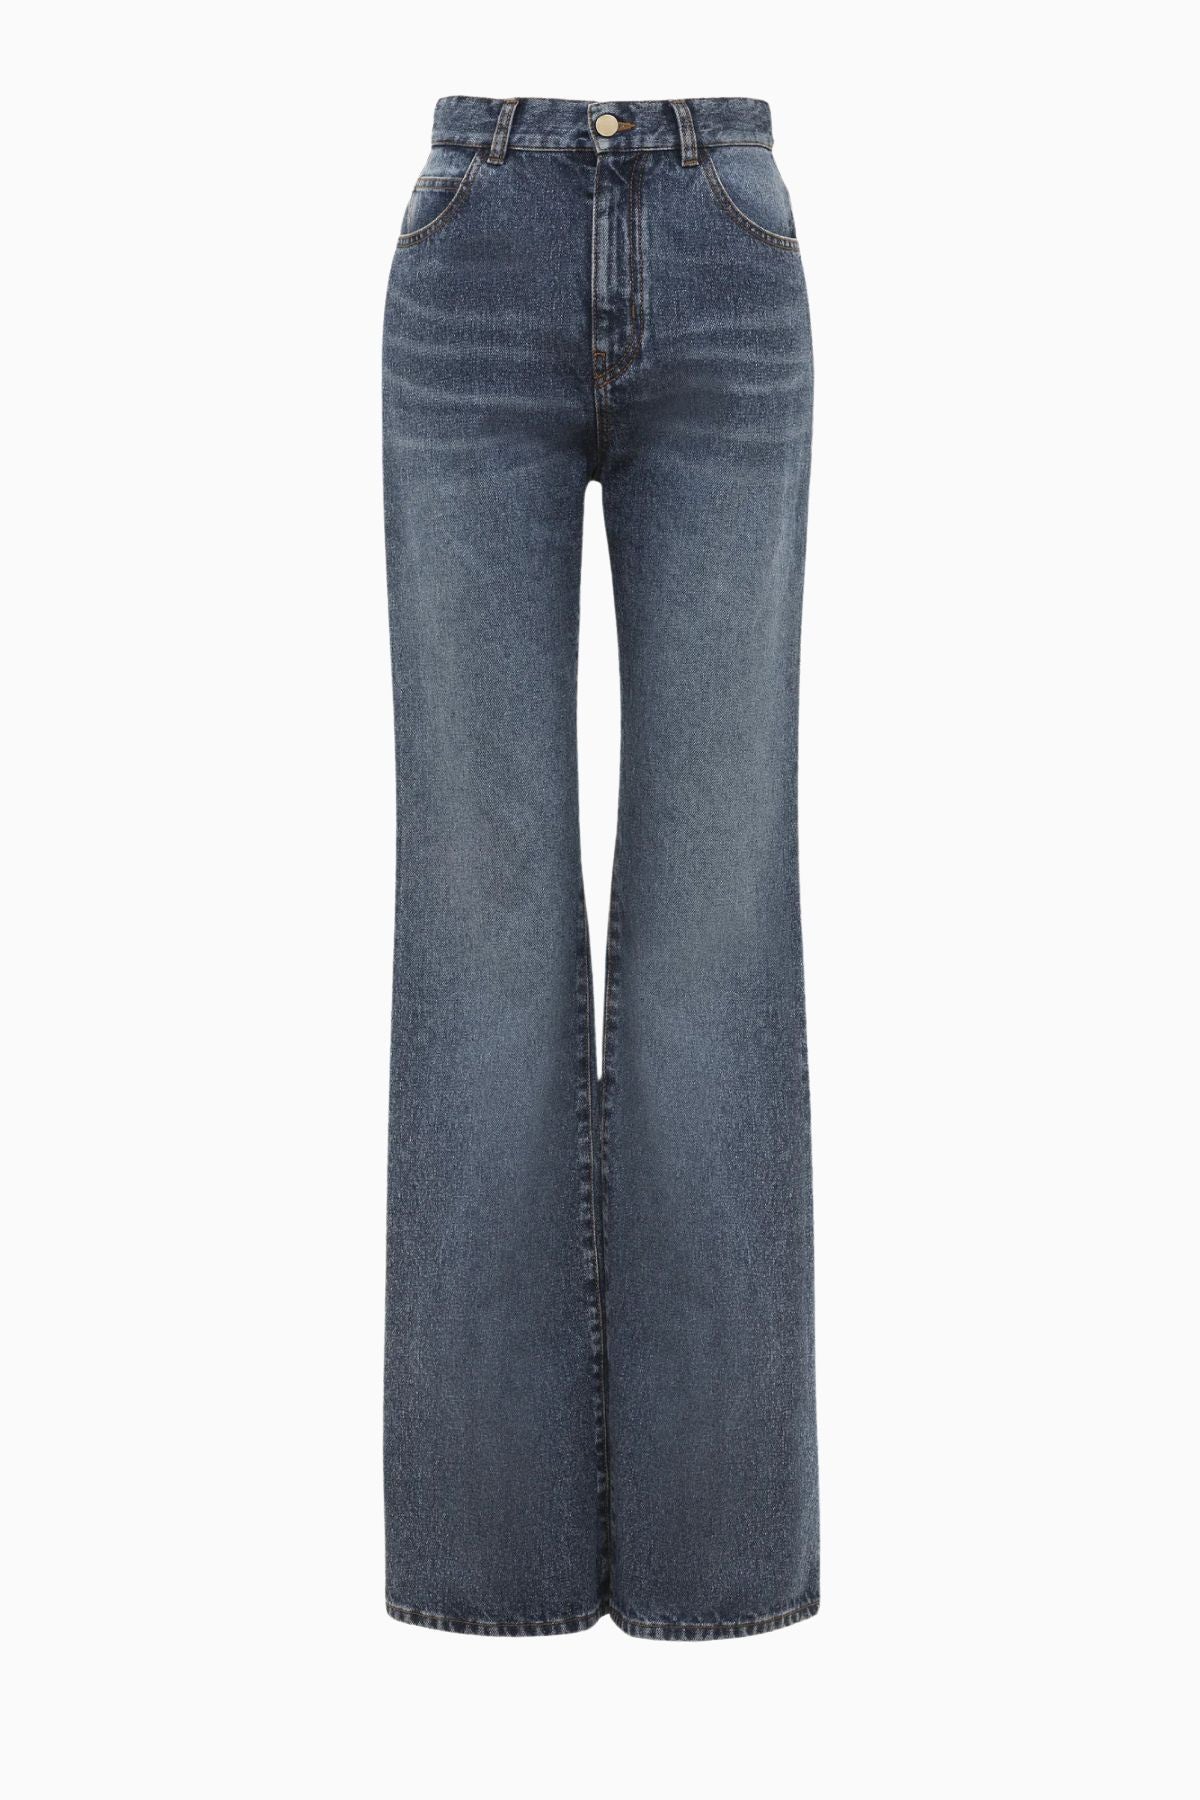 Chloé Recycled Denim Jeans - Faded Denim